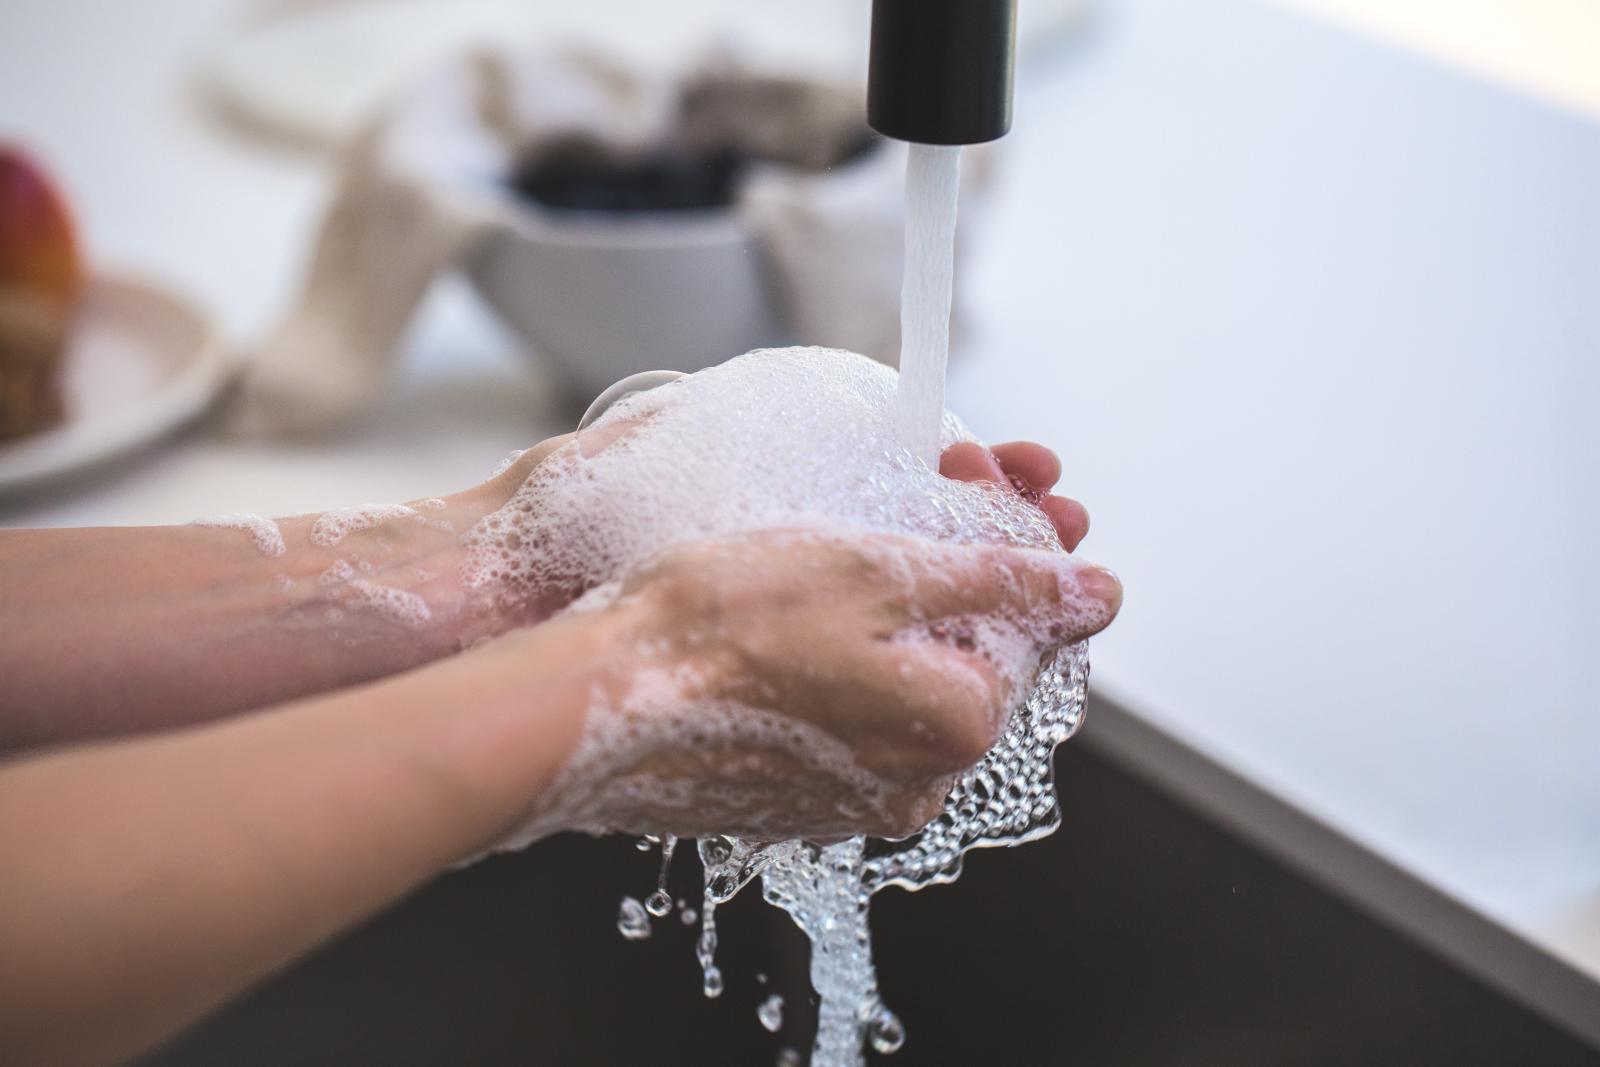 Washing hands. Photo credit: Pexels